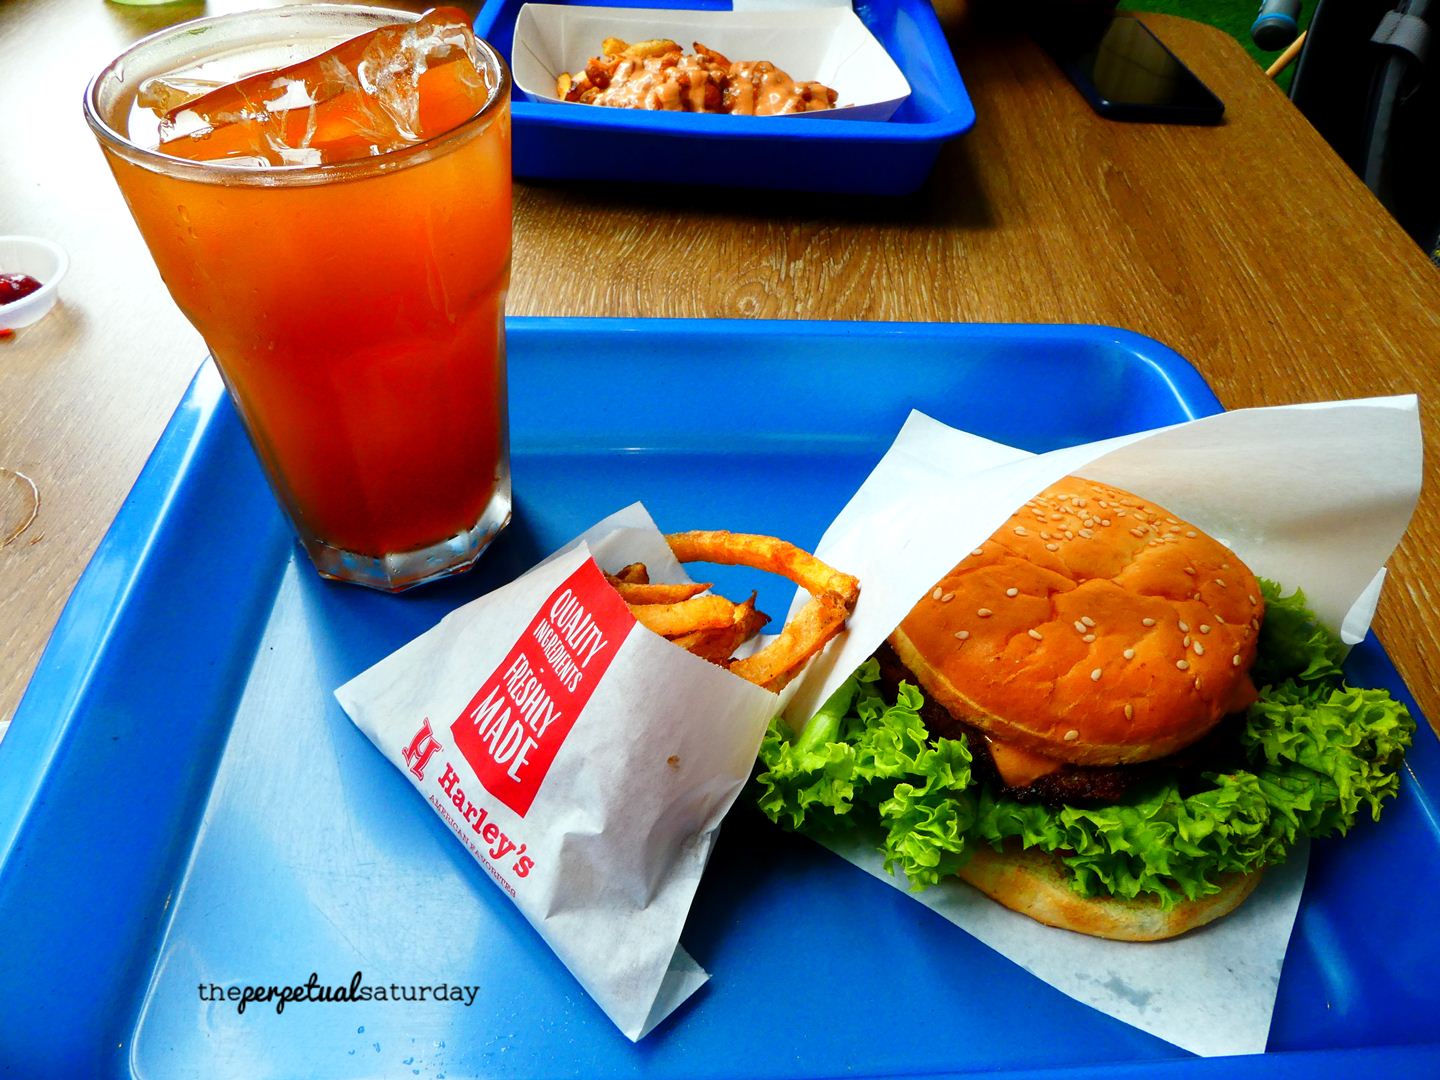 Cheeseburger combo (RM16.50) @ Harley's, Damansara City Mall